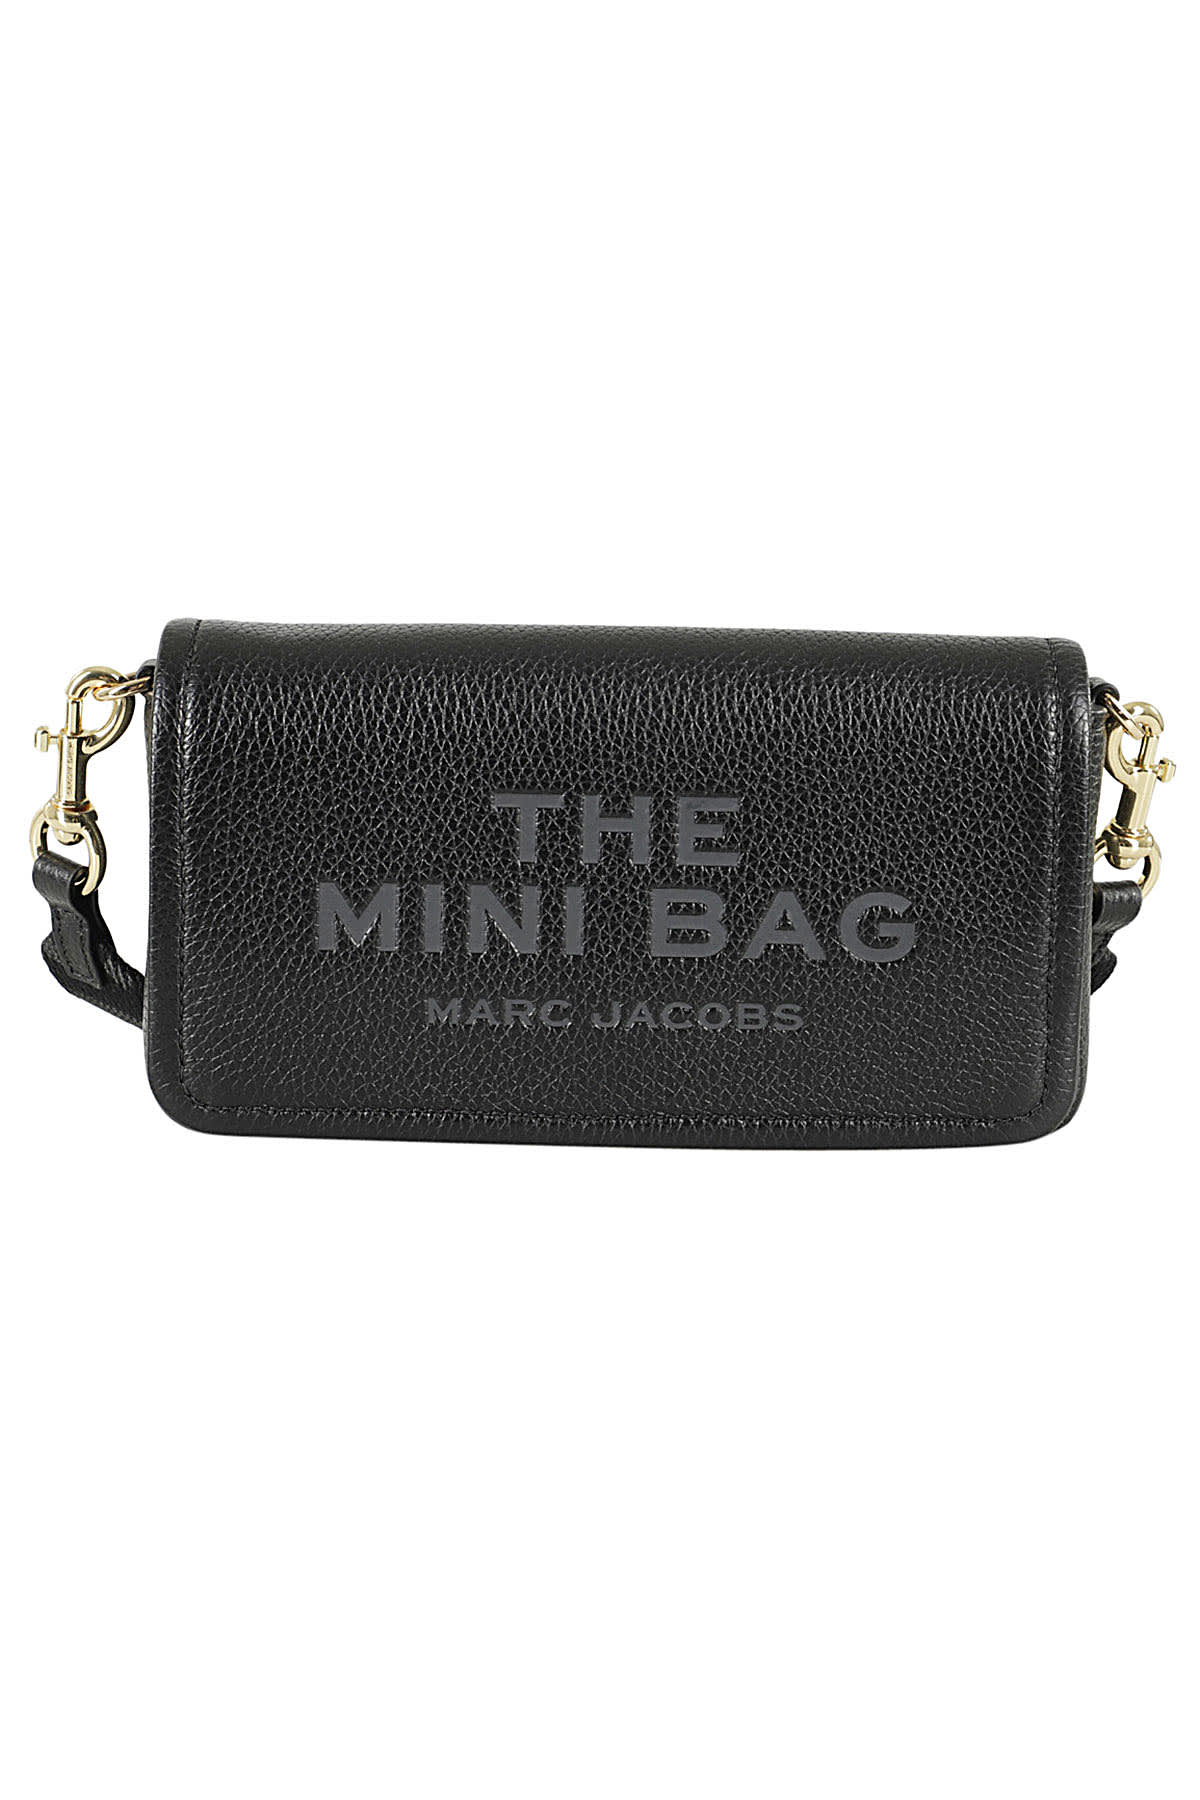 Shop Marc Jacobs The Mini Crossbody